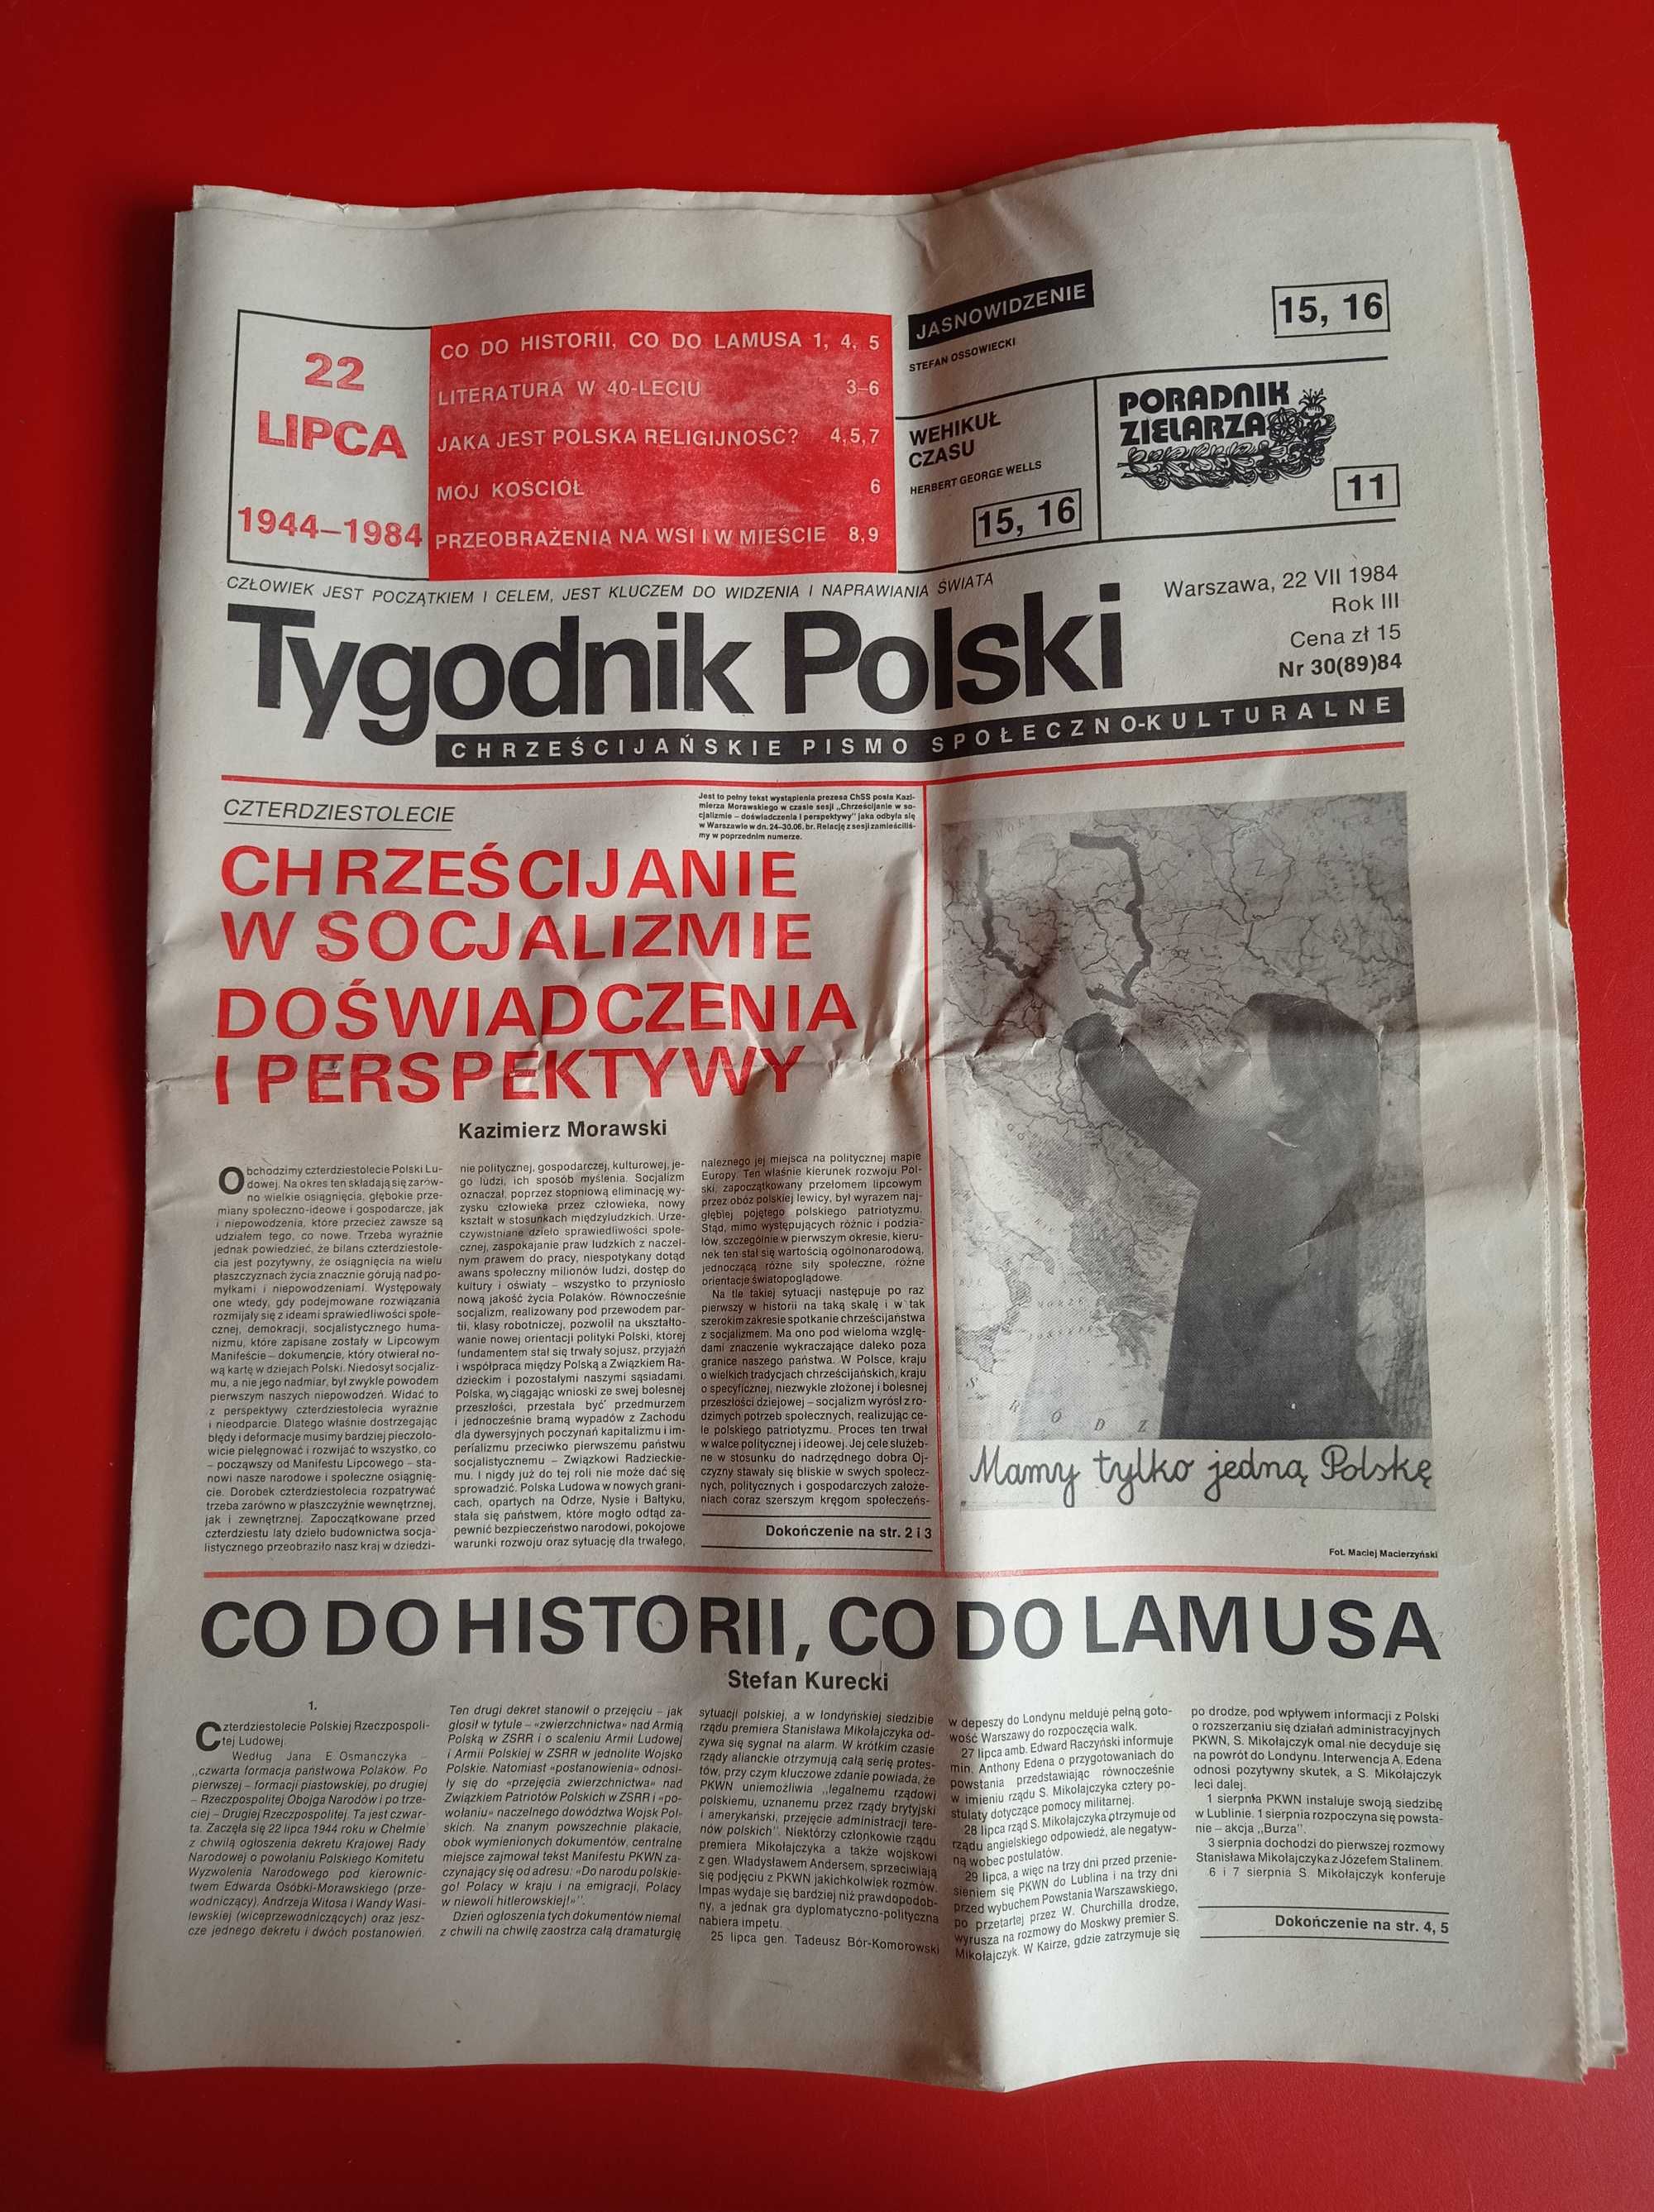 Tygodnik Polski, nr 30/1984, 22 lipca 1984